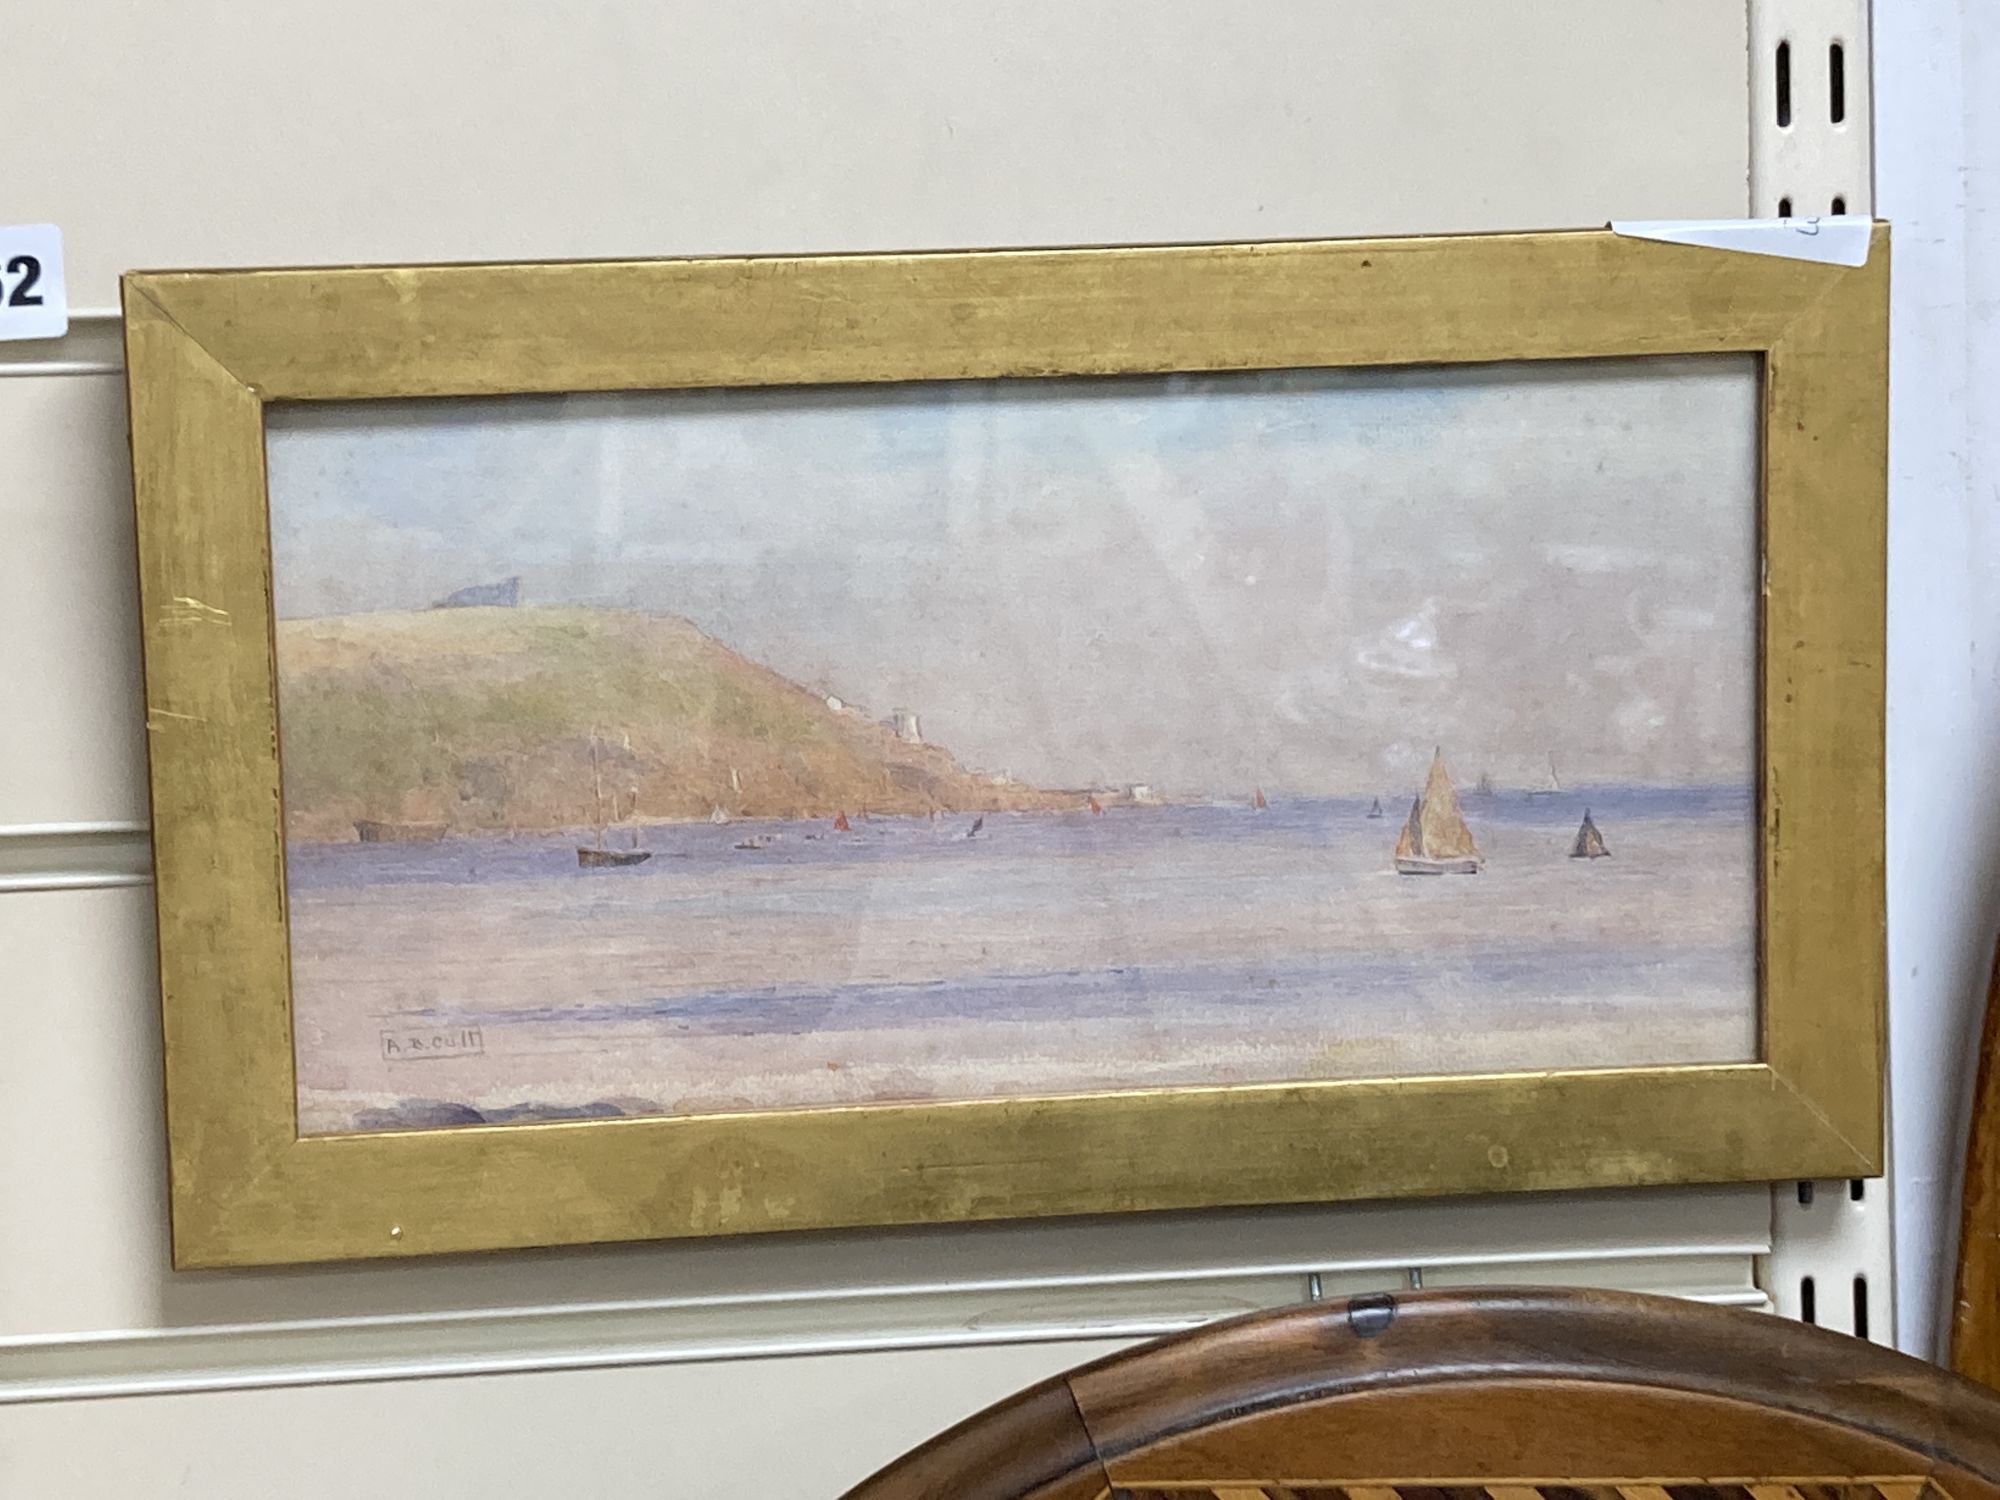 Alma Burton Cull (1880-1931), watercolour, Shipping along the coast, signed in pencil, 14 x 29cm